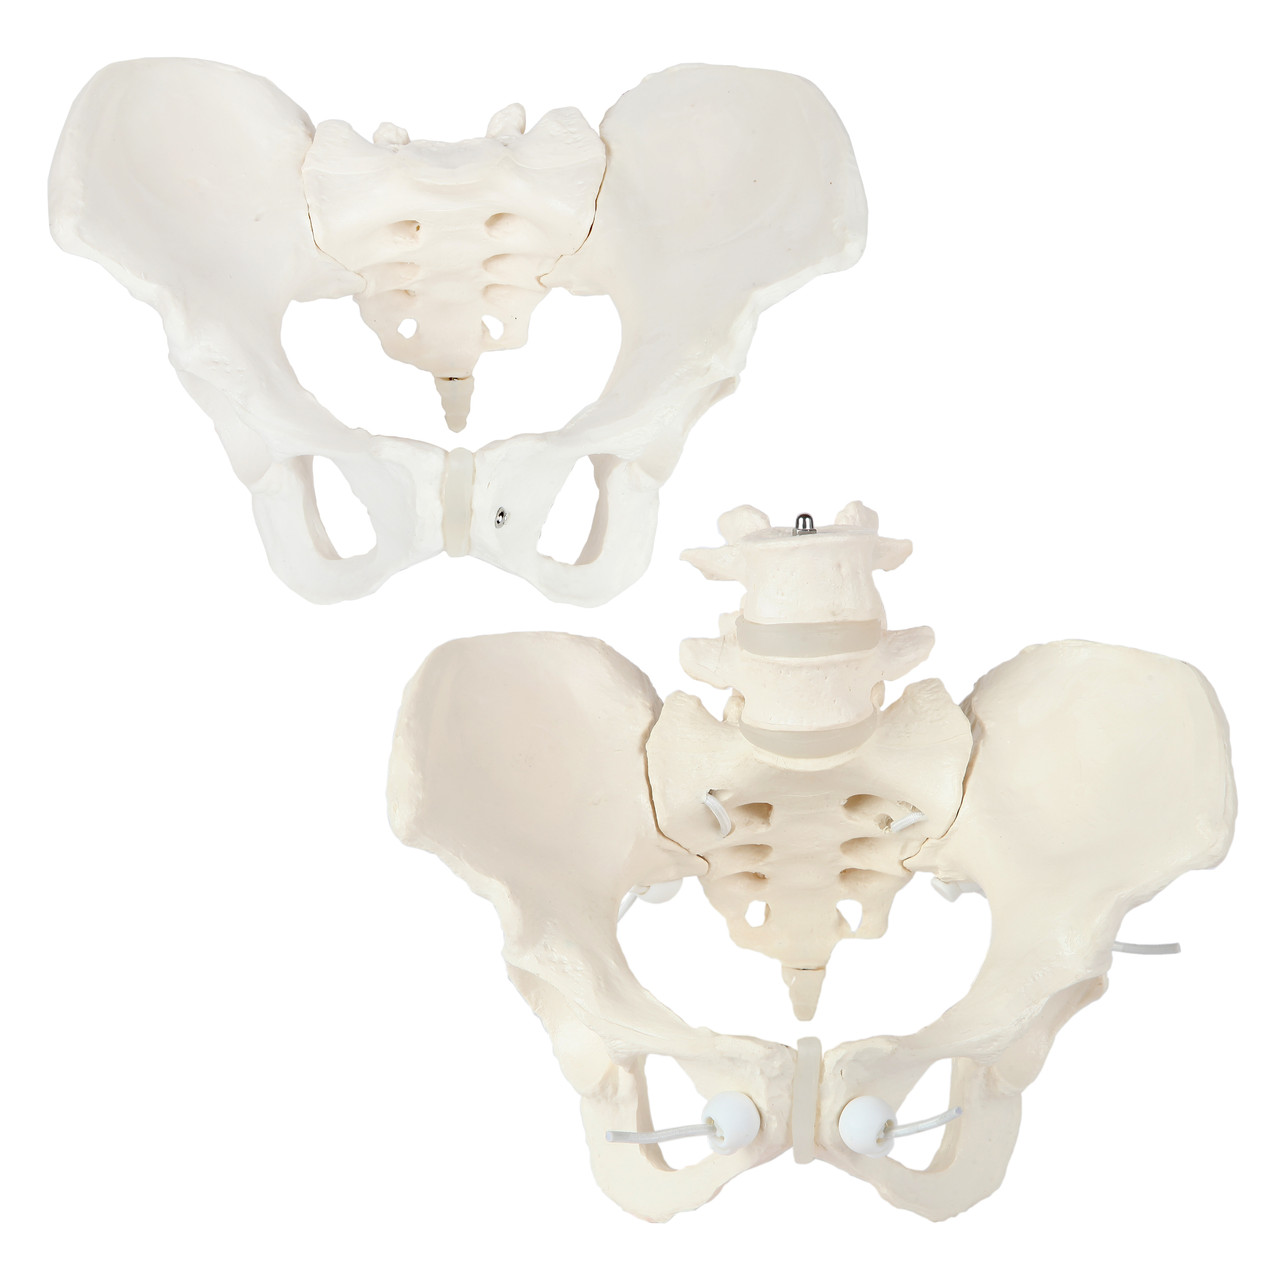 female pelvis bones anatomy